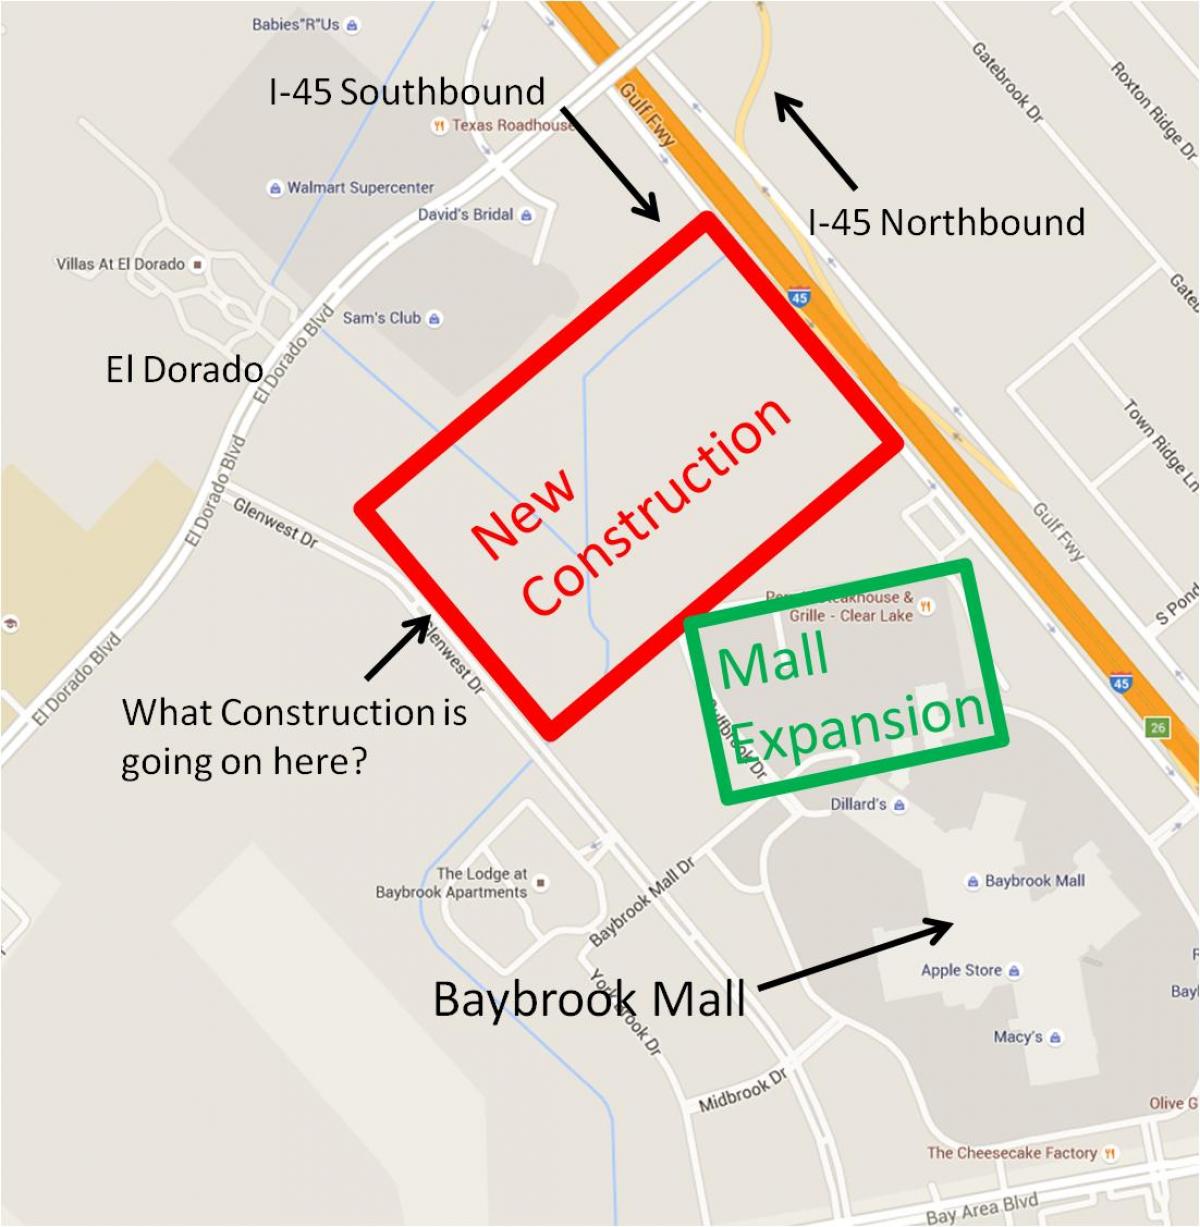 kort over Baybrook mall